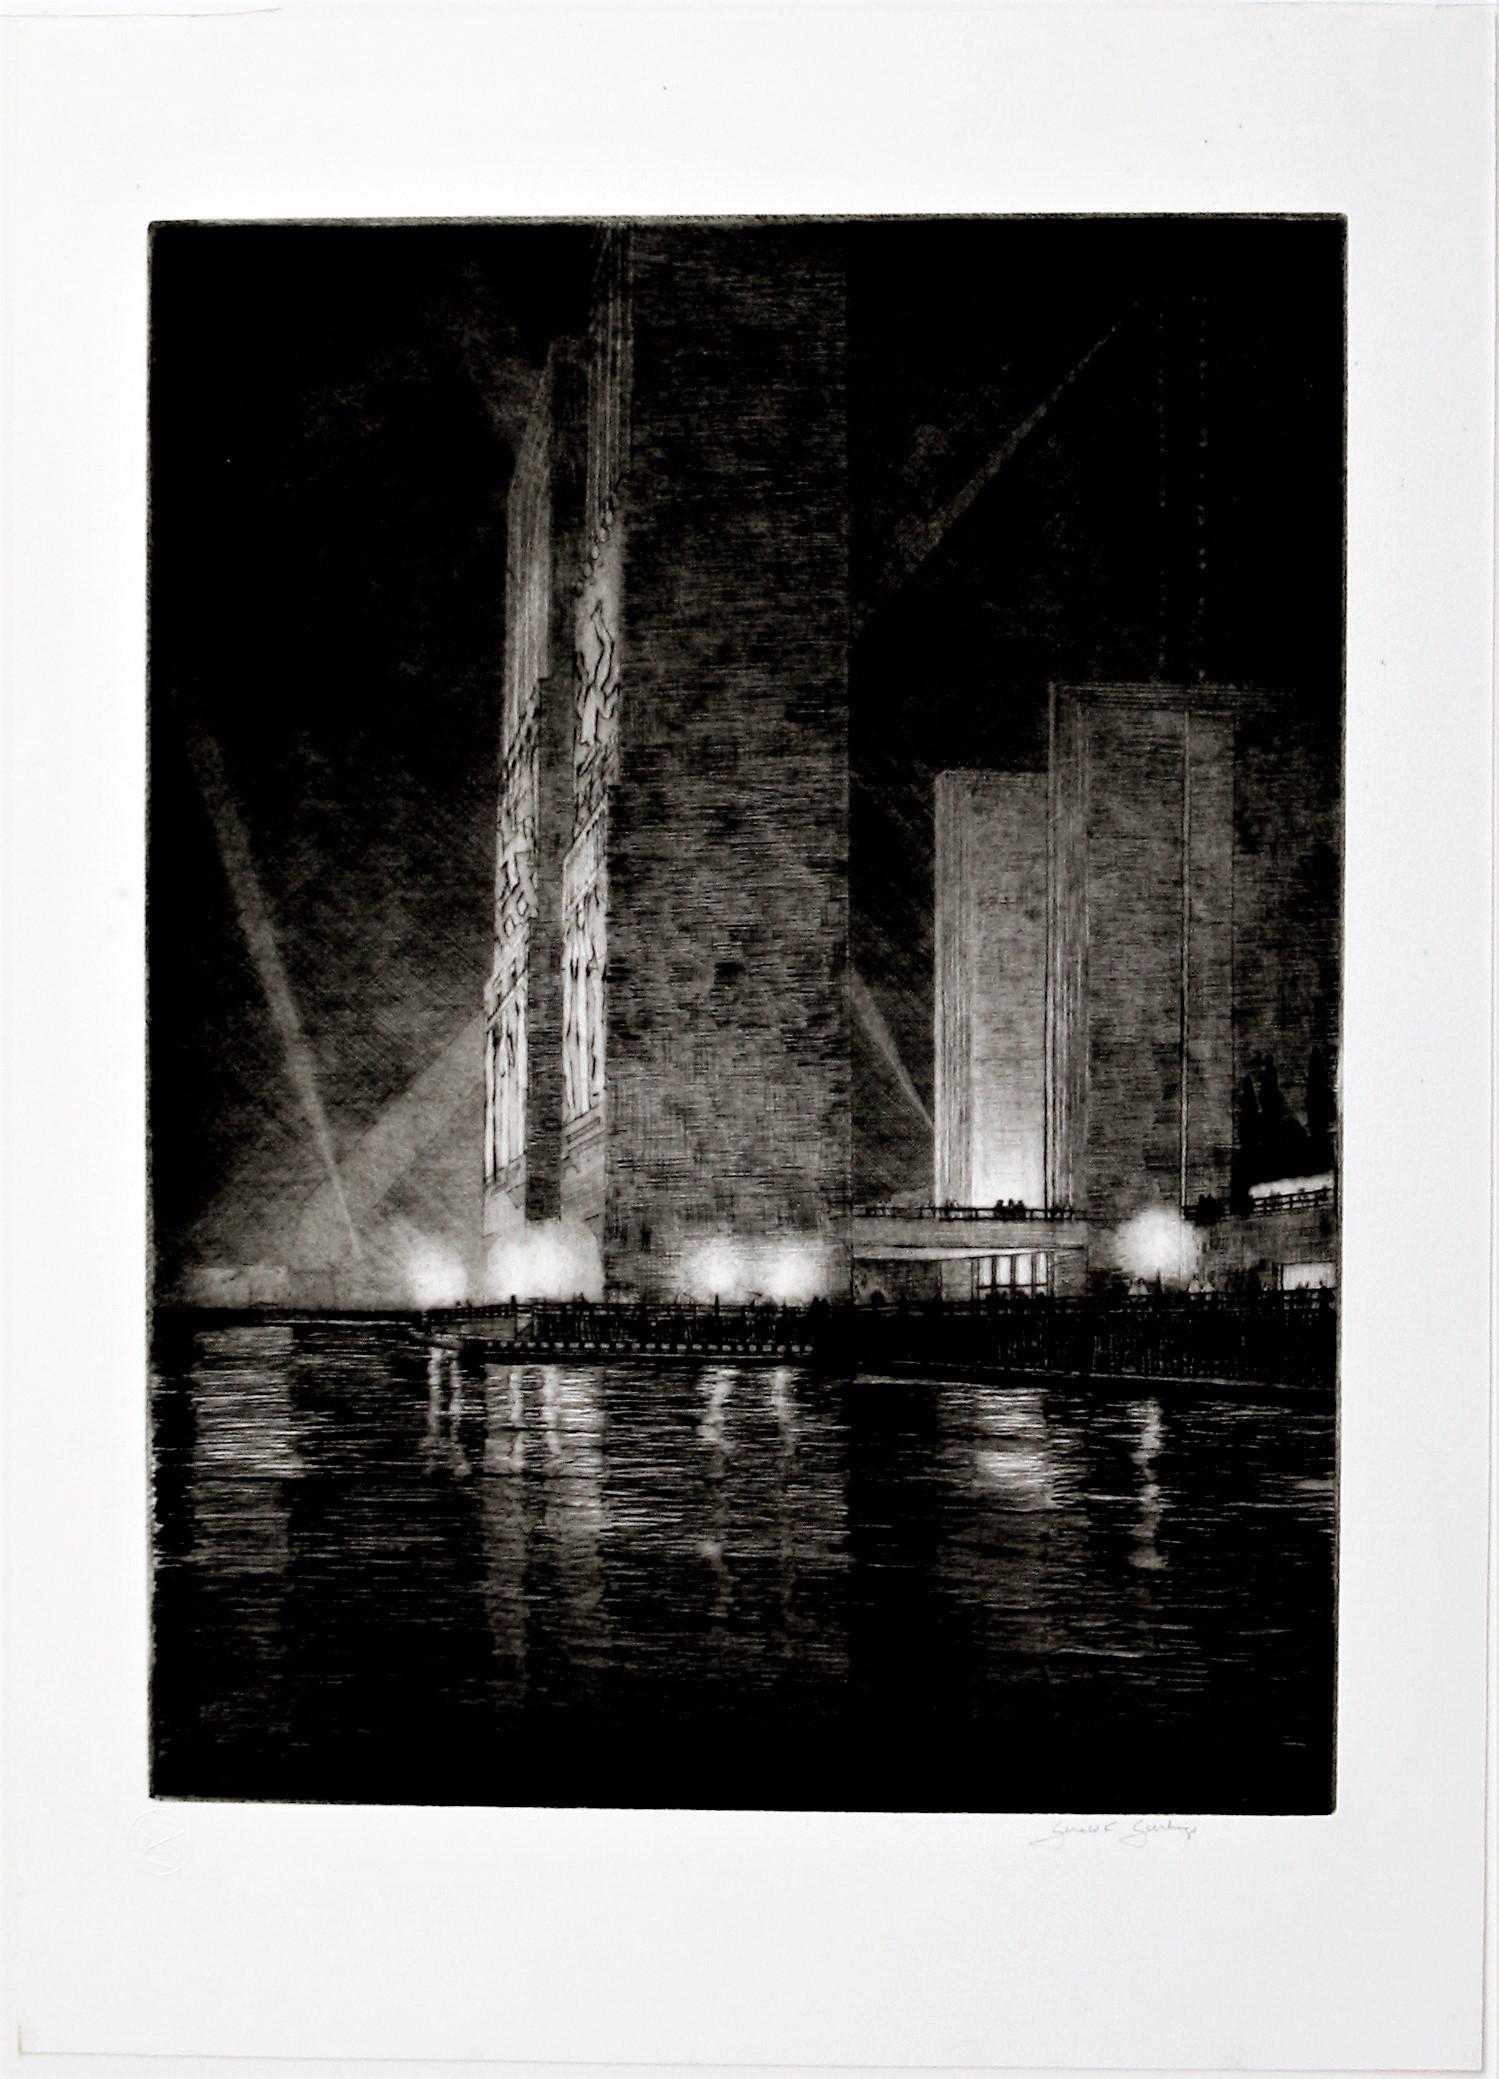 Grand Canal, America (Electrical Buildings at Night) - Print by Gerald Geerlings